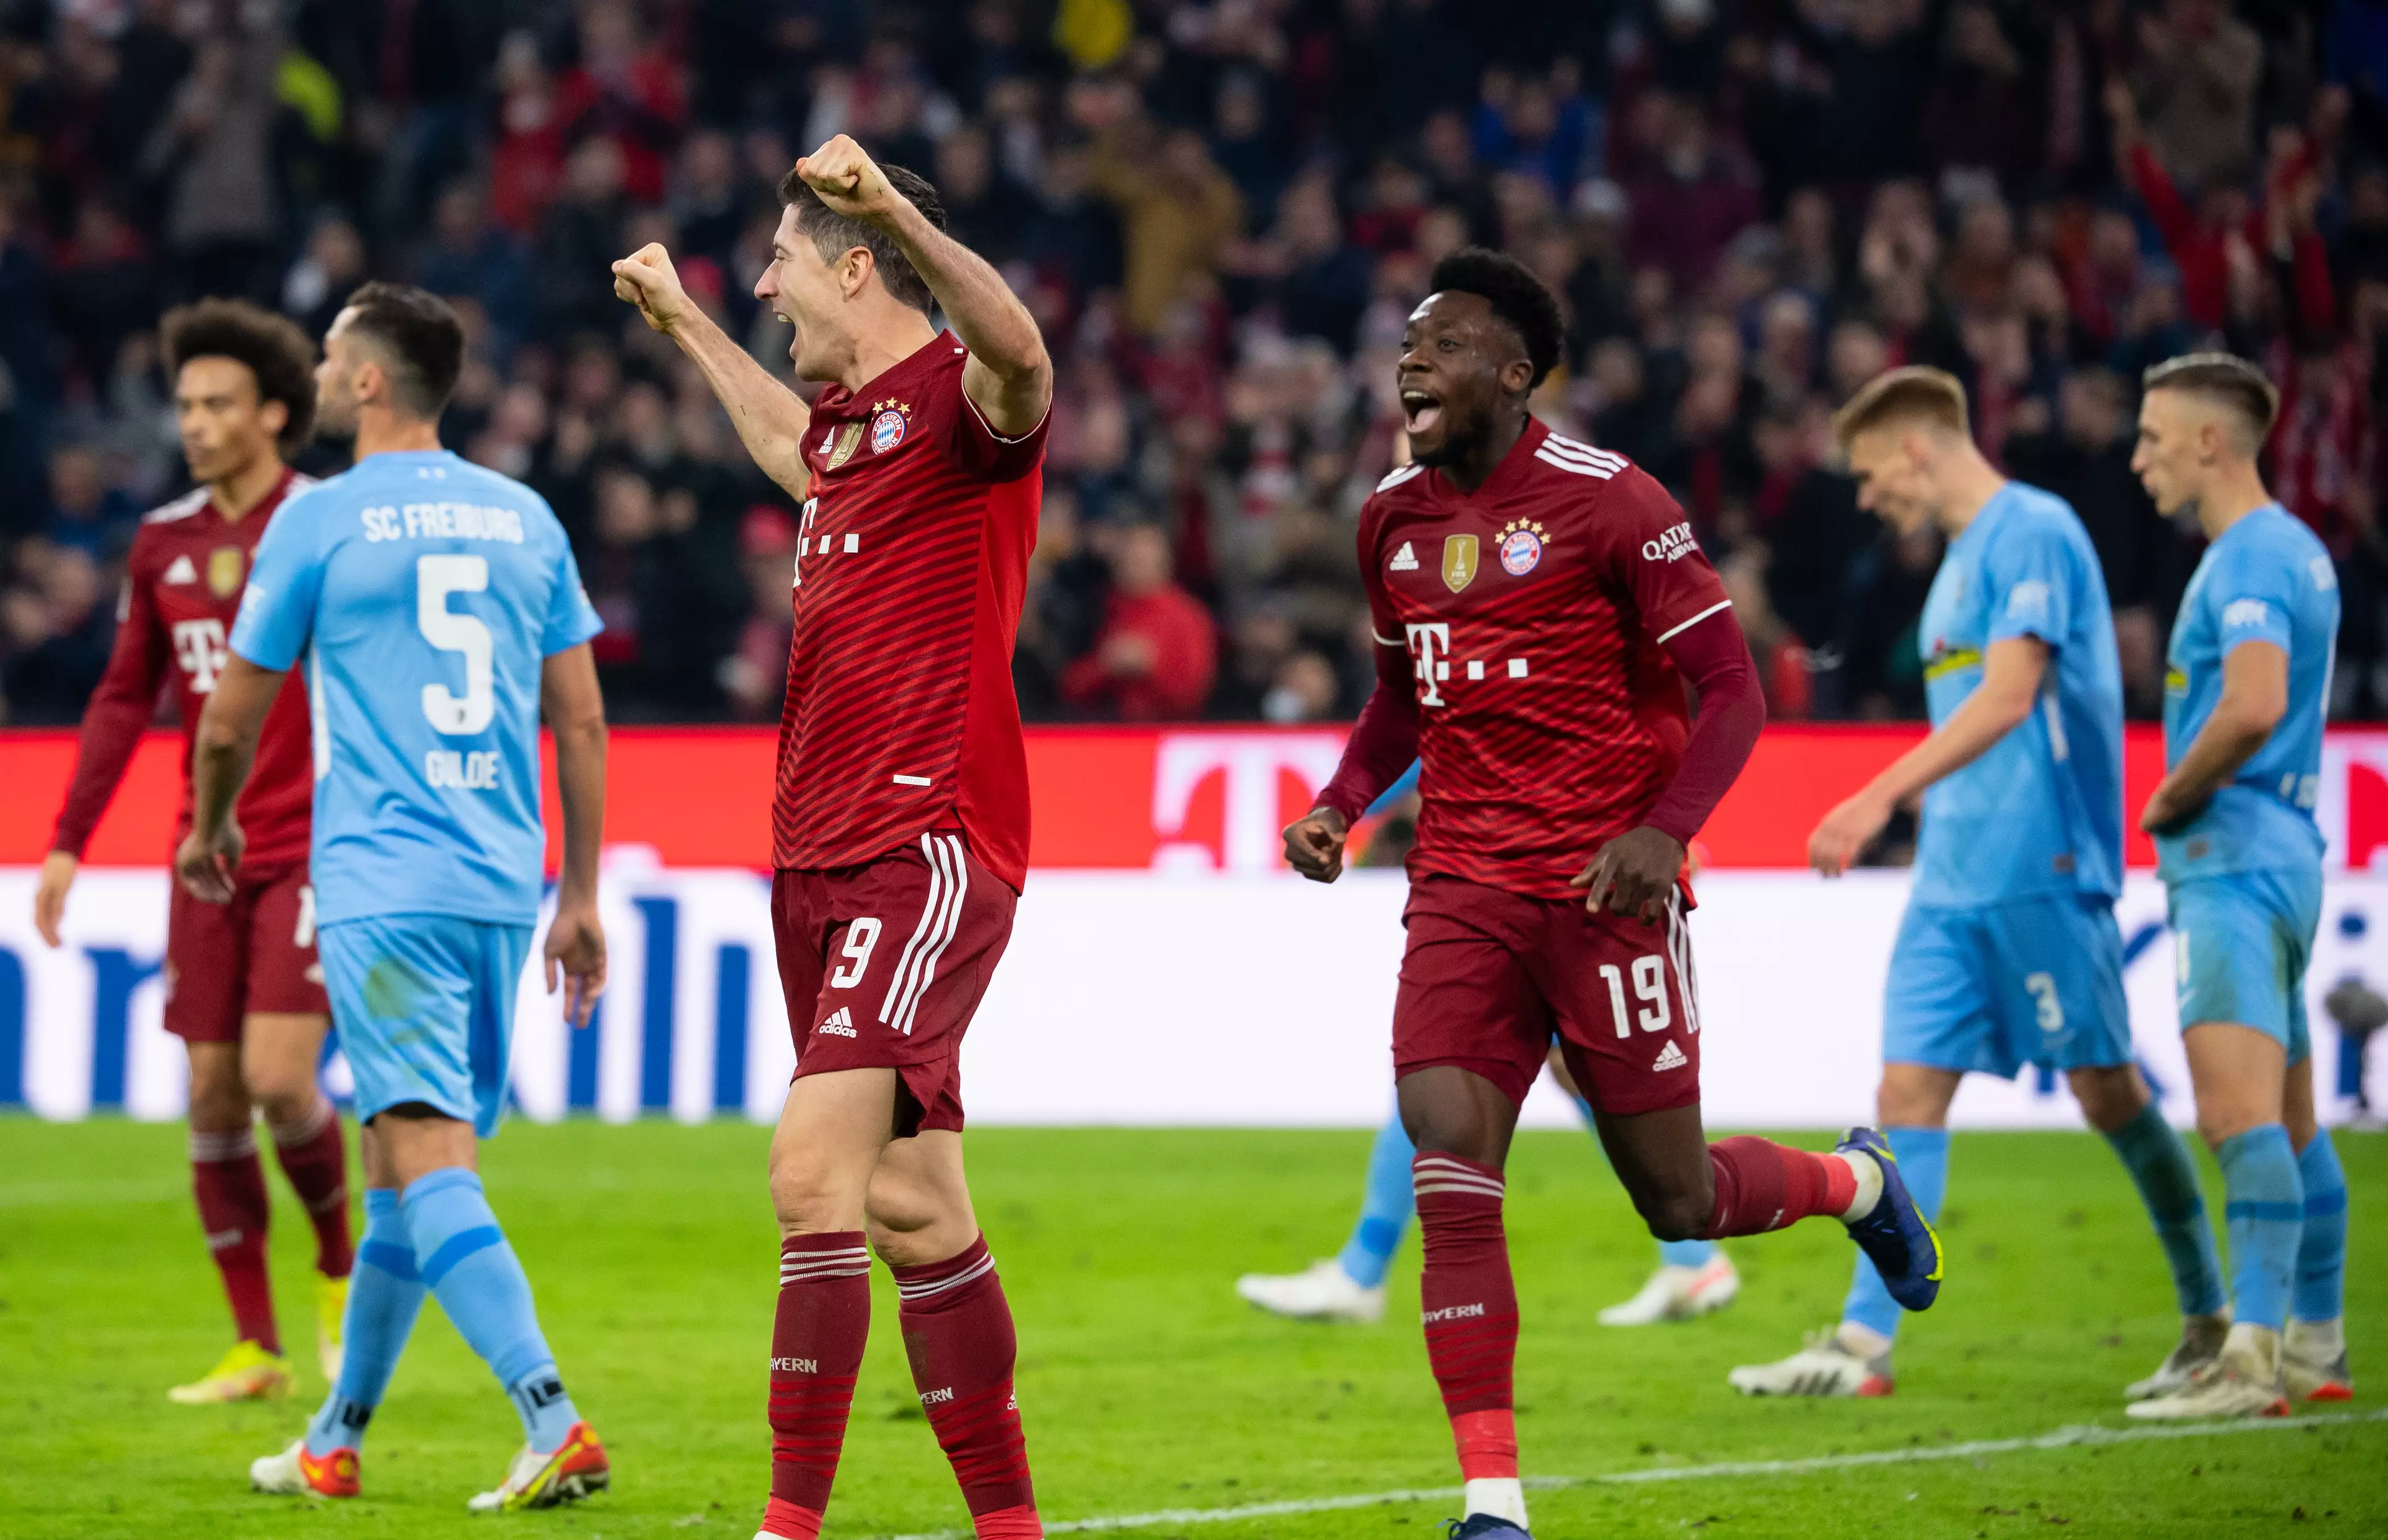 PA: Robert Lewandowski celebrates scoring for Bayern Munich.